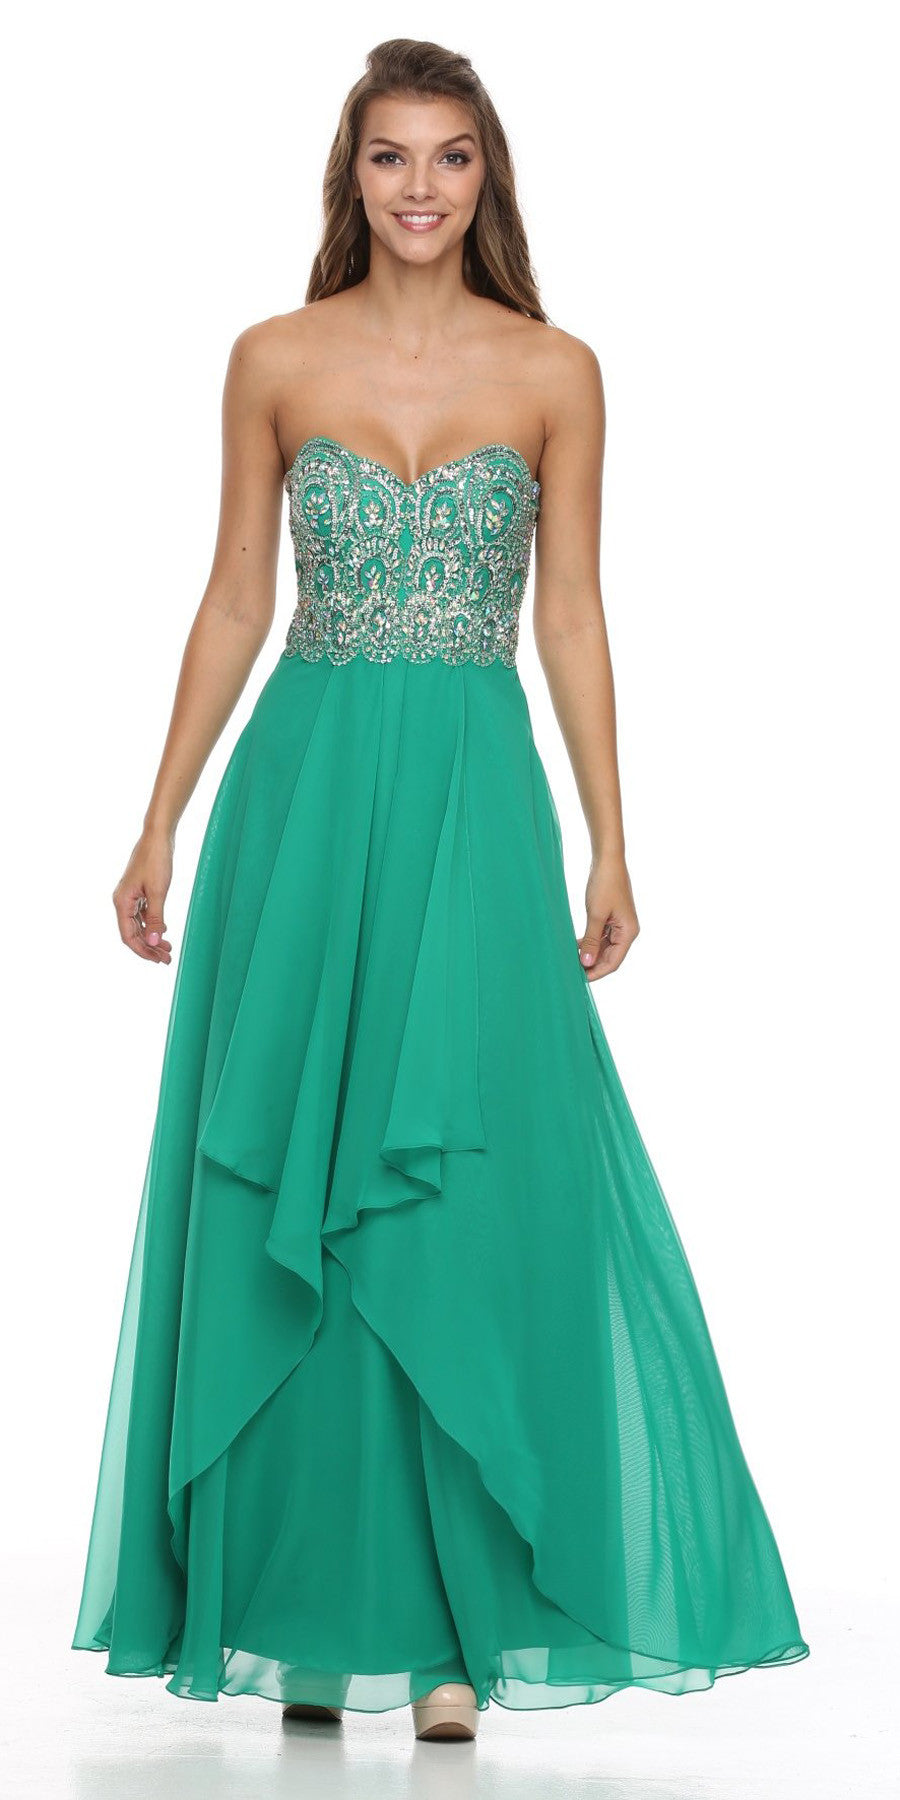 emerald green strapless prom dress